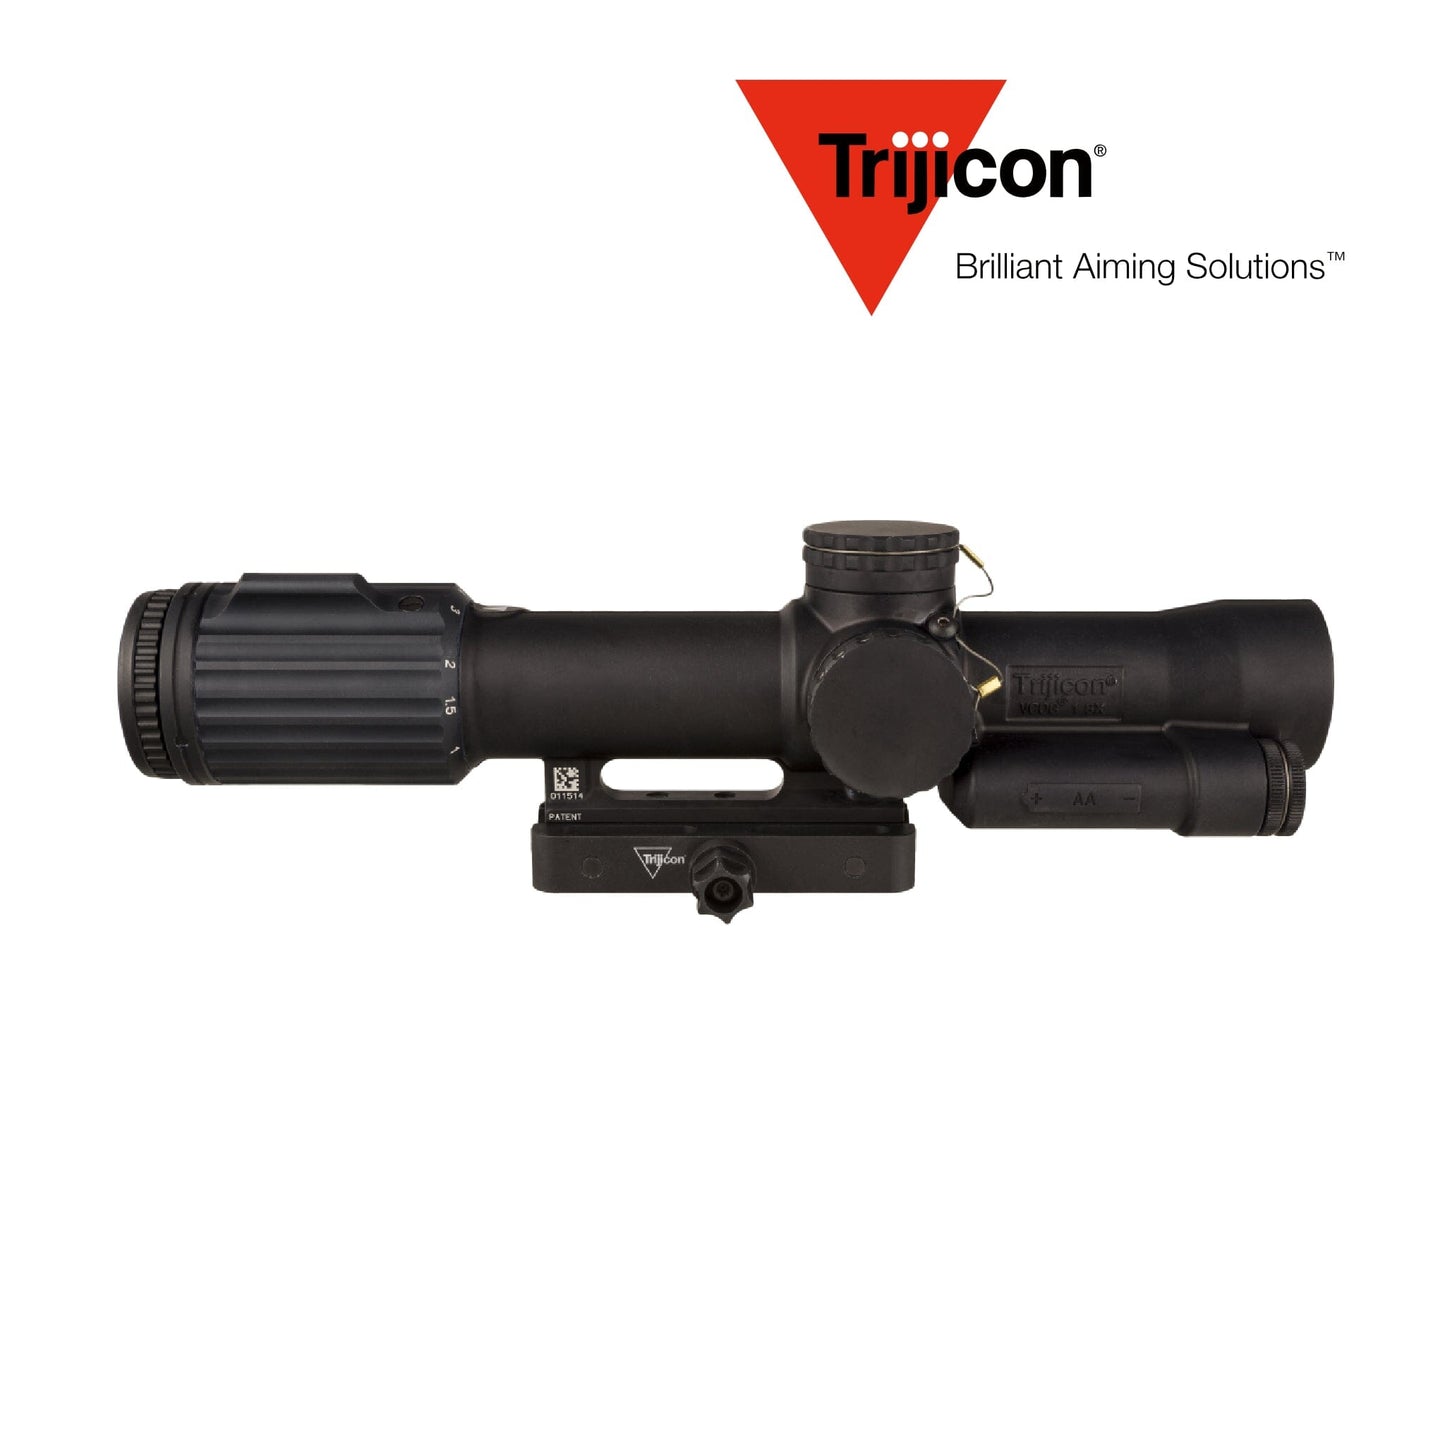 Trijicon VCOG 1-8x28 LED Rifle Scope - Red MRAD Crosshair Dot - VC18-C-2400014 LPVO Rifle Scope Trijicon 